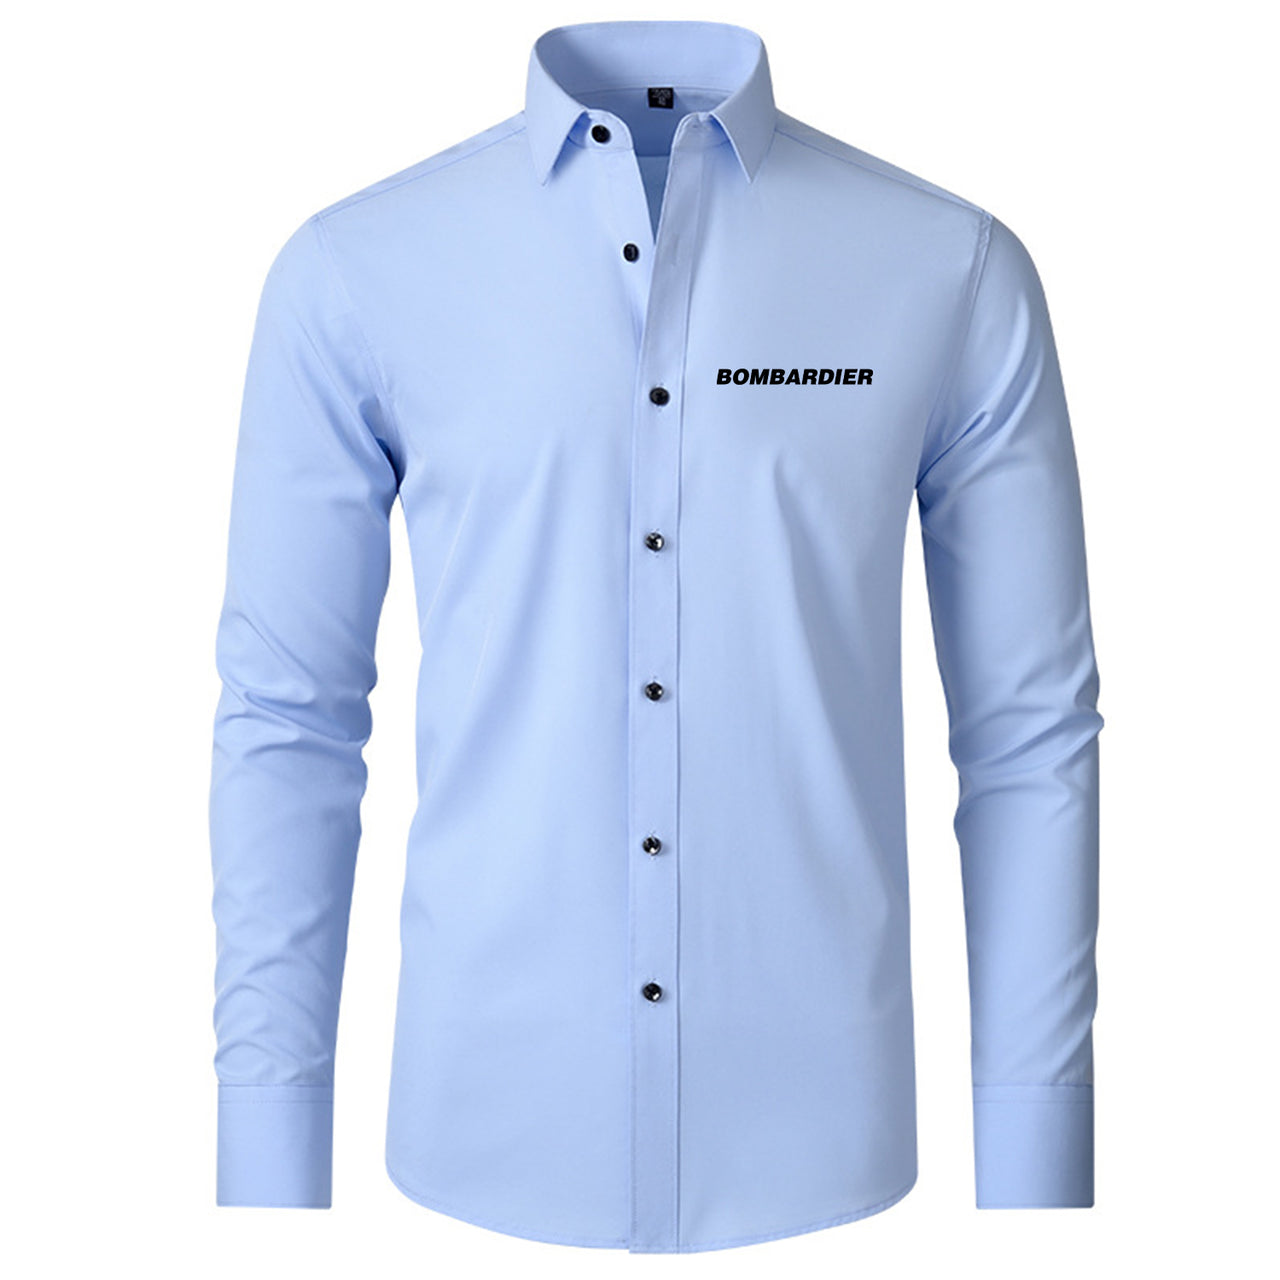 Bombardier & Text Designed Long Sleeve Shirts